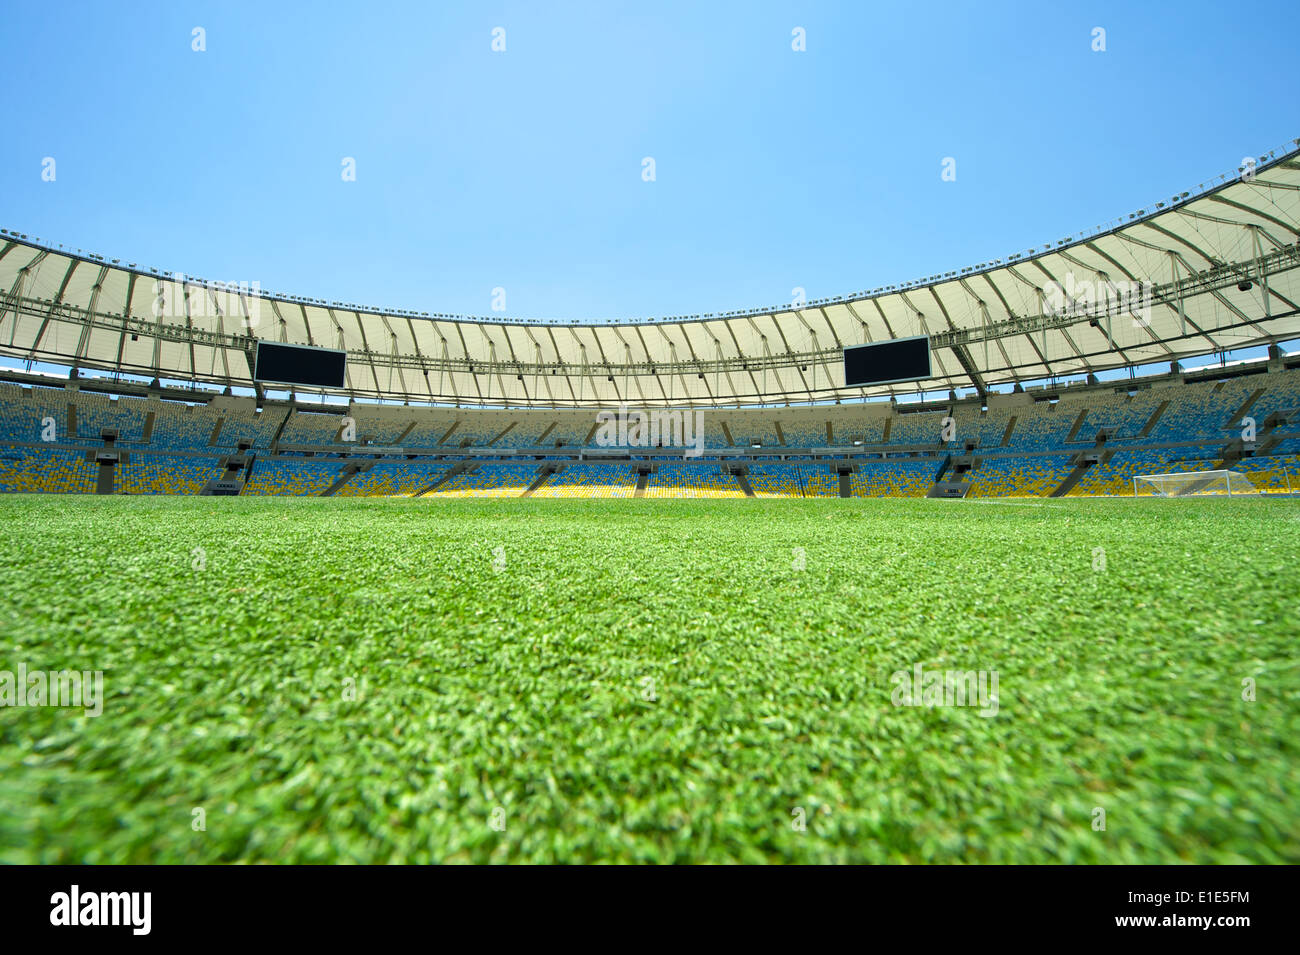 Pitch-level view of Maracana football soccer stadium under bright blue sky Stock Photo